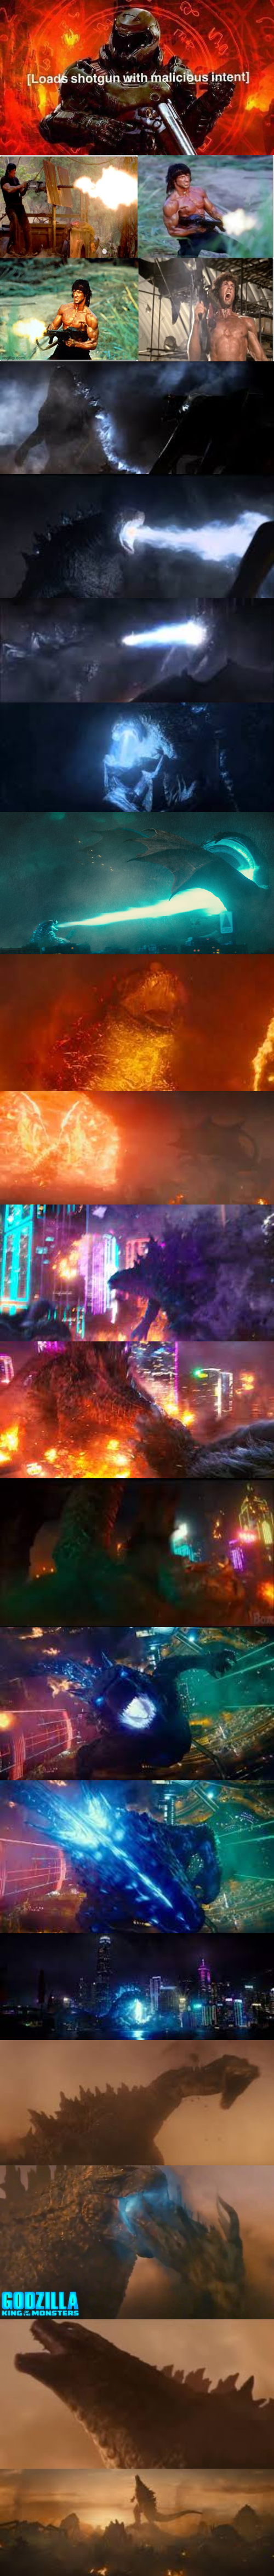 Godzilla the ultimate death Blank Meme Template